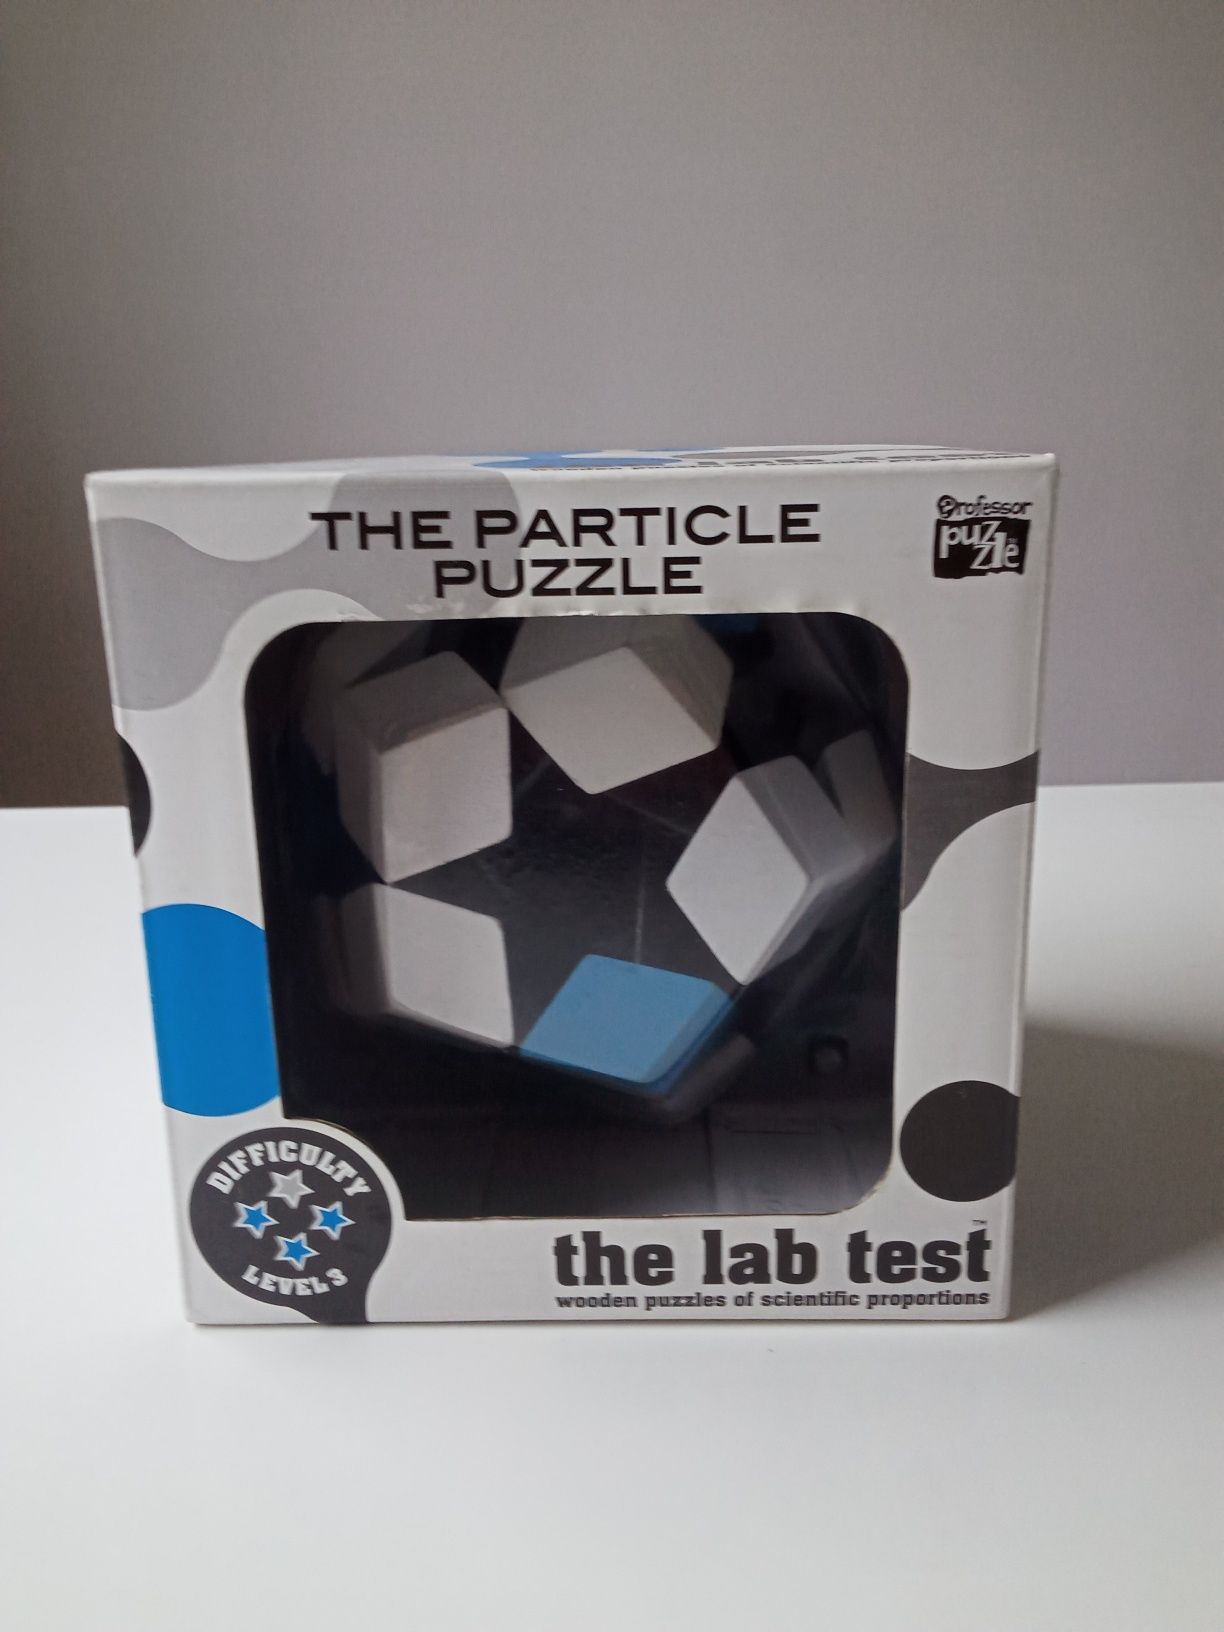 Łamigłówka puzzle przestrzenne - The Particle Puzzle, The lab test